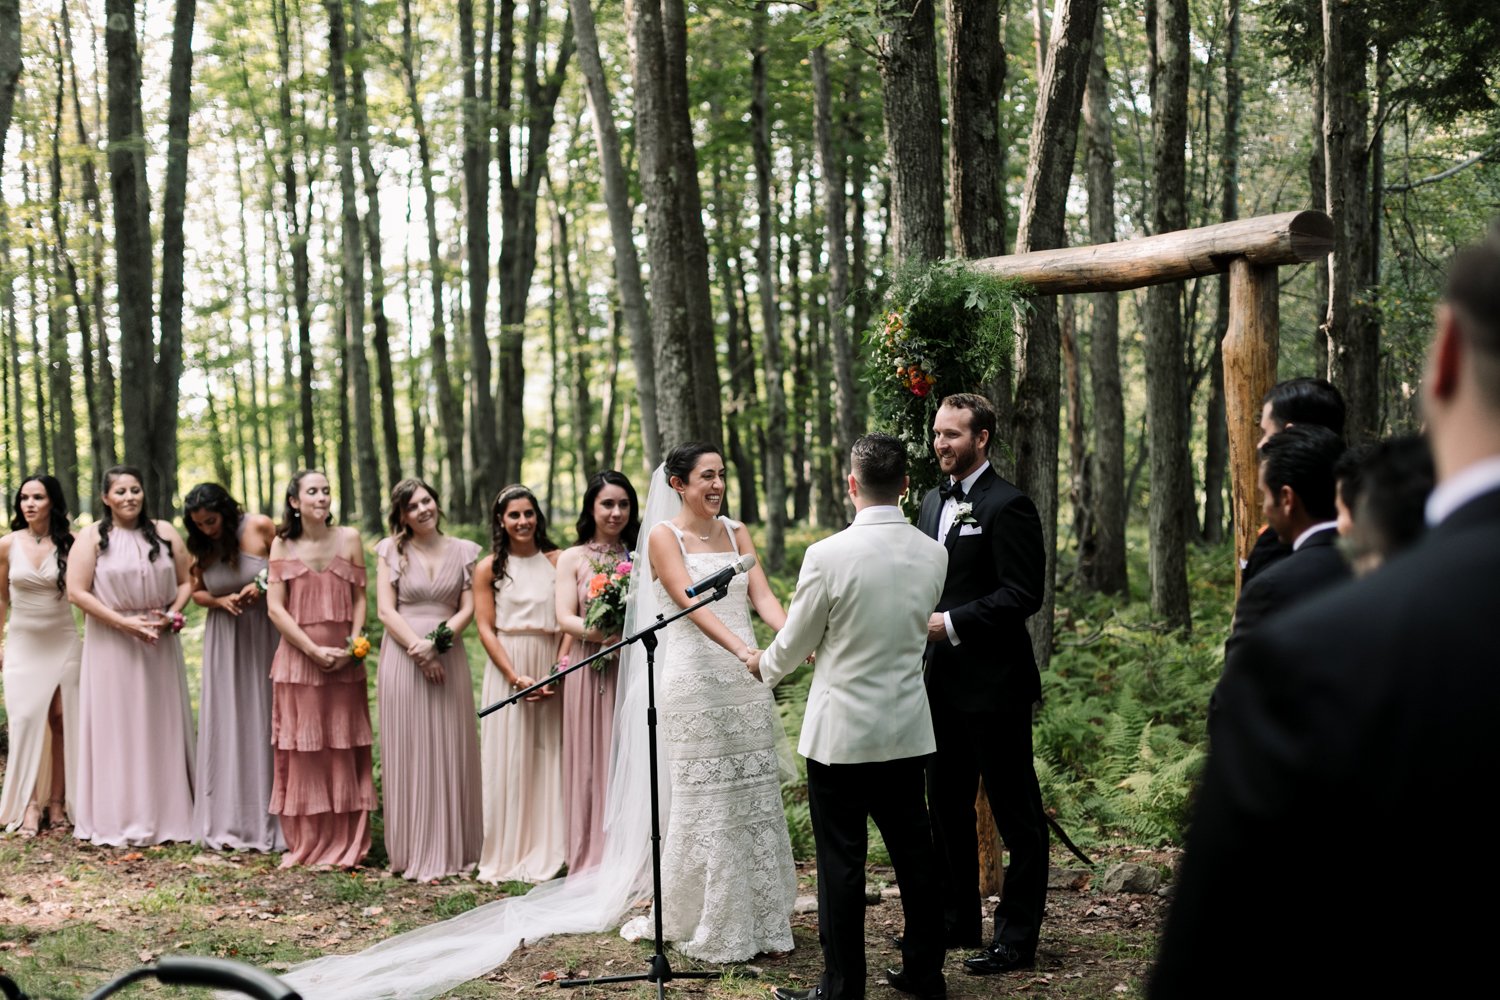 Handsome-Hollow-Catskills-wedding-photographer-64.jpg